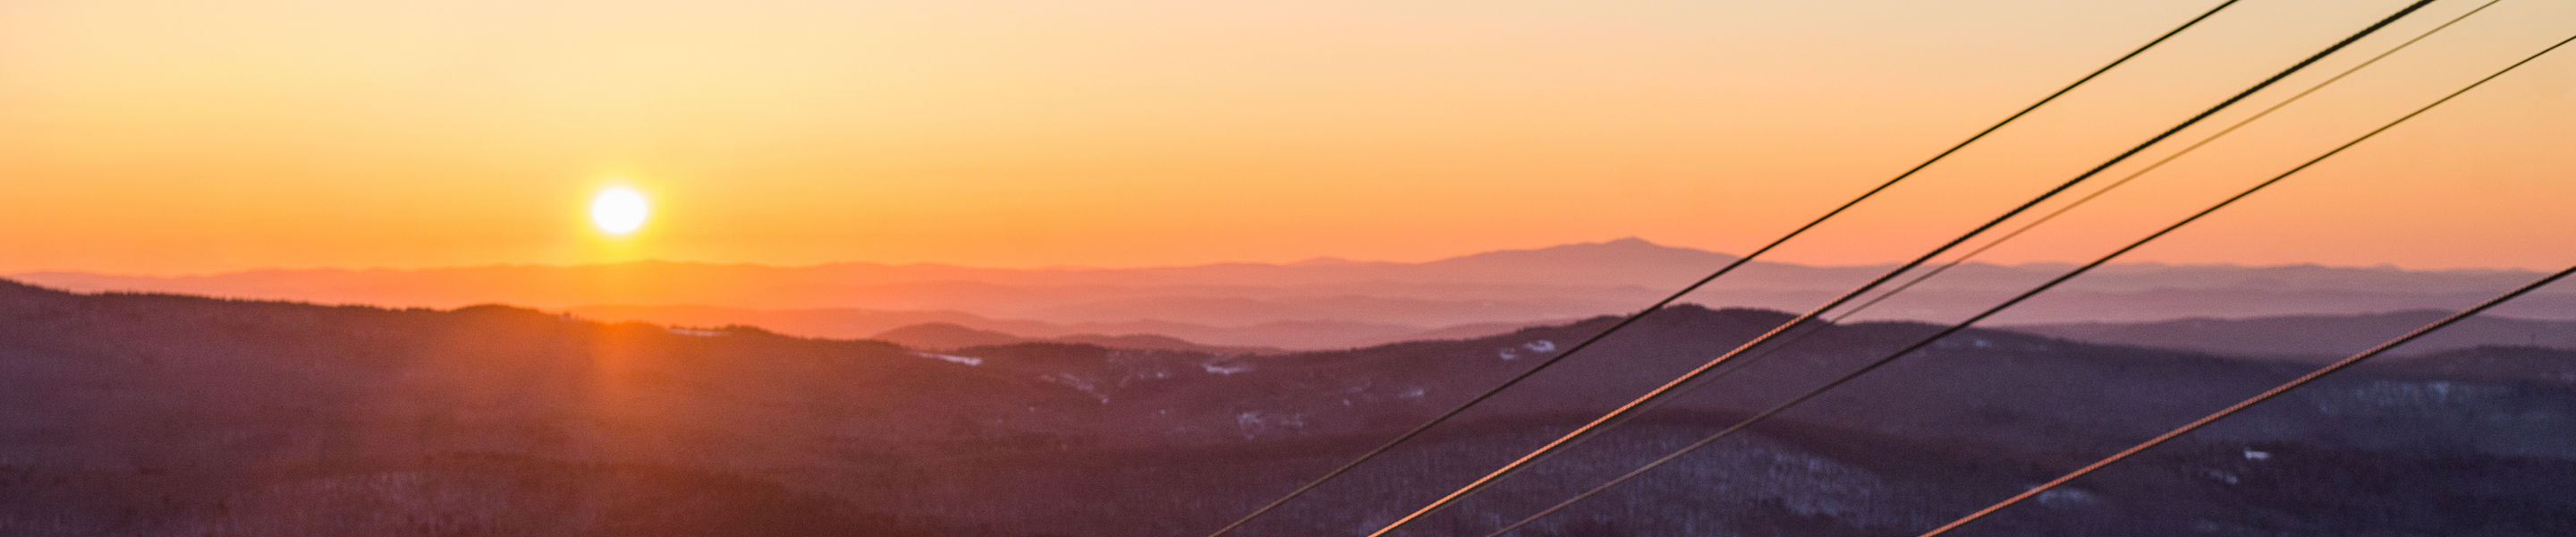 Skier Makes Sunrise Turns at Mount Snow